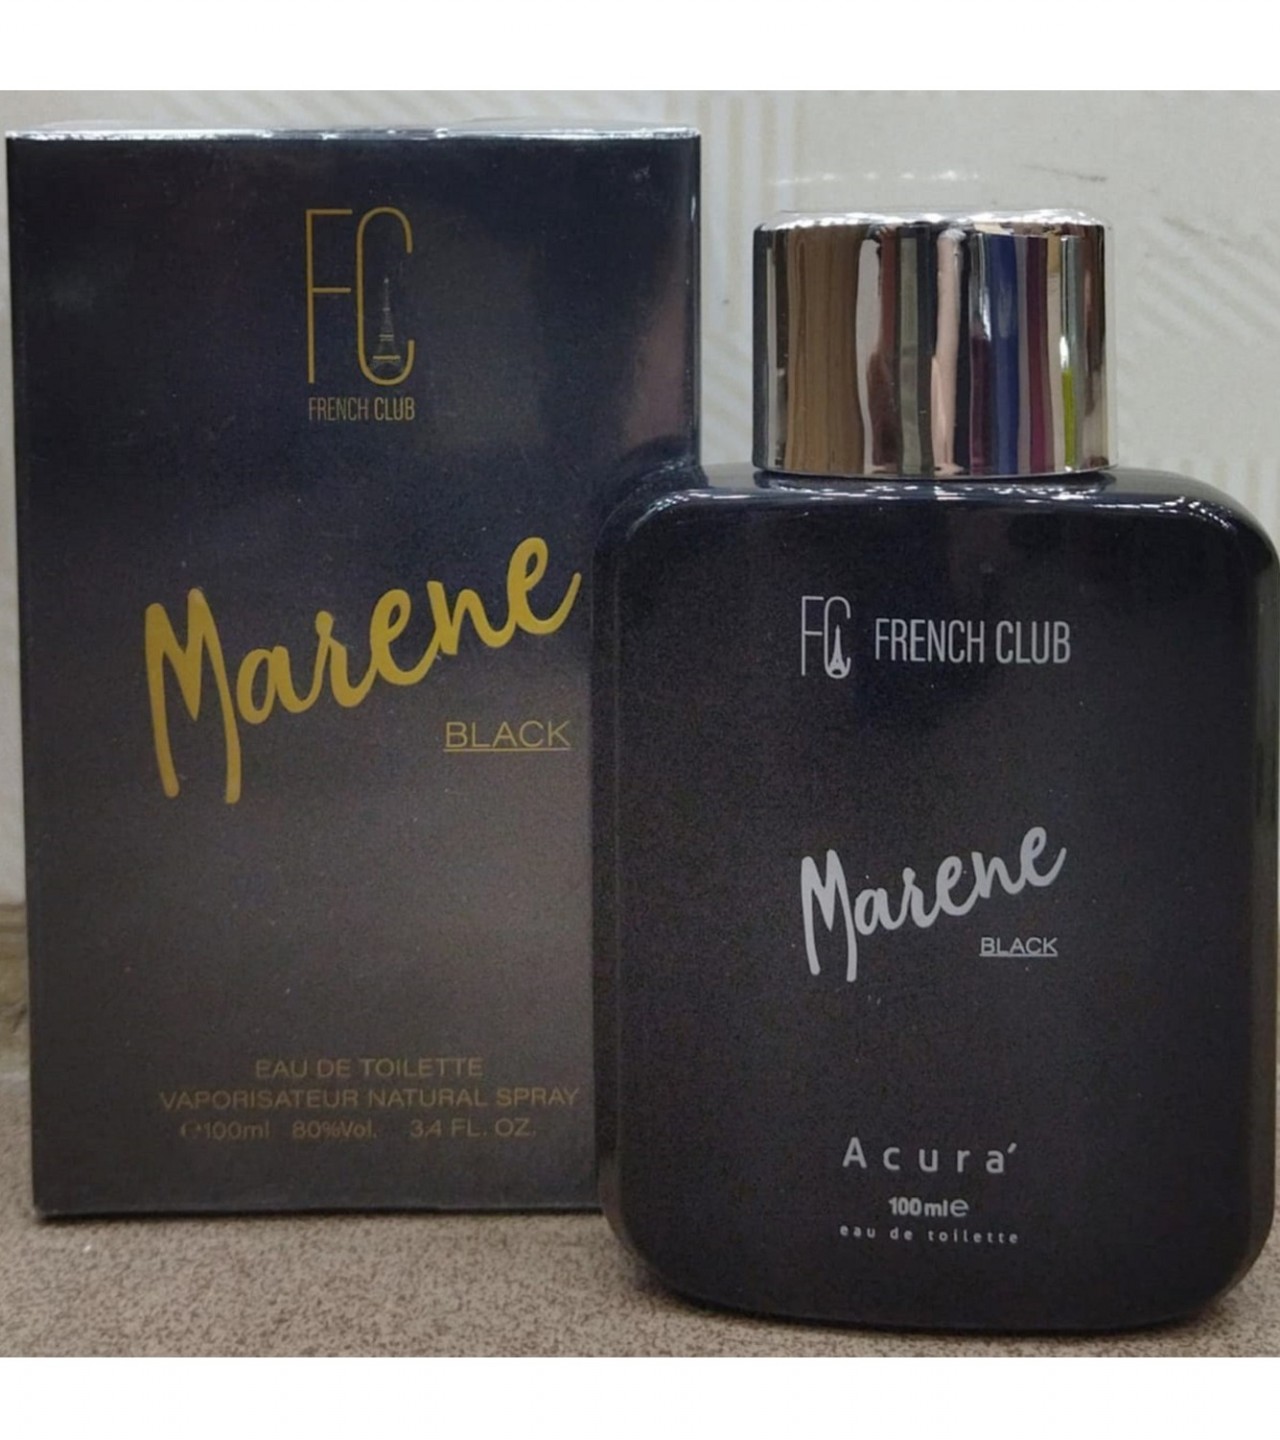 Acura French Club Marene Black Perfume For Men – 100 ml